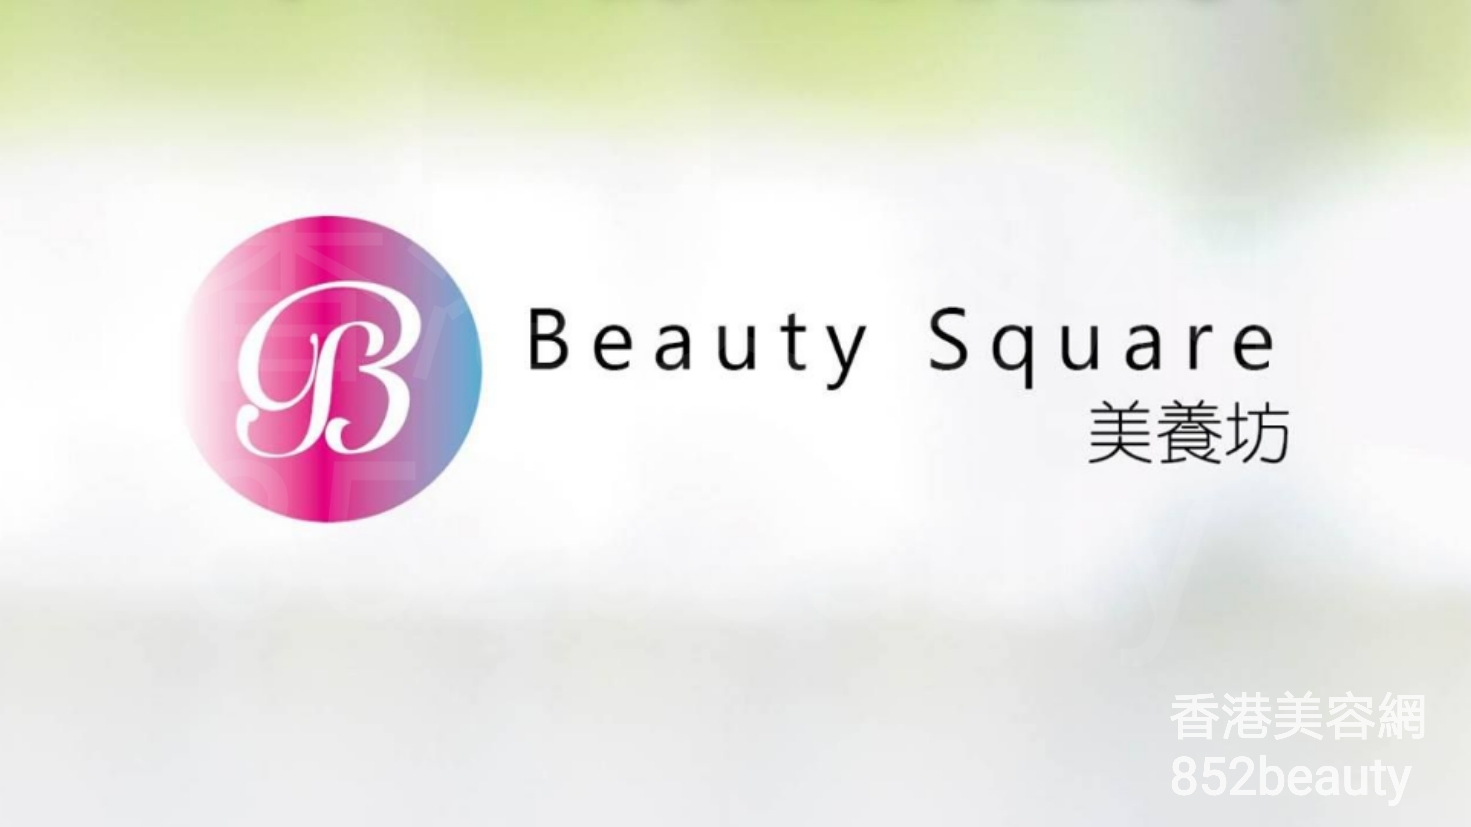 Facial Care: 美養坊 Beauty Square (光榮結業)